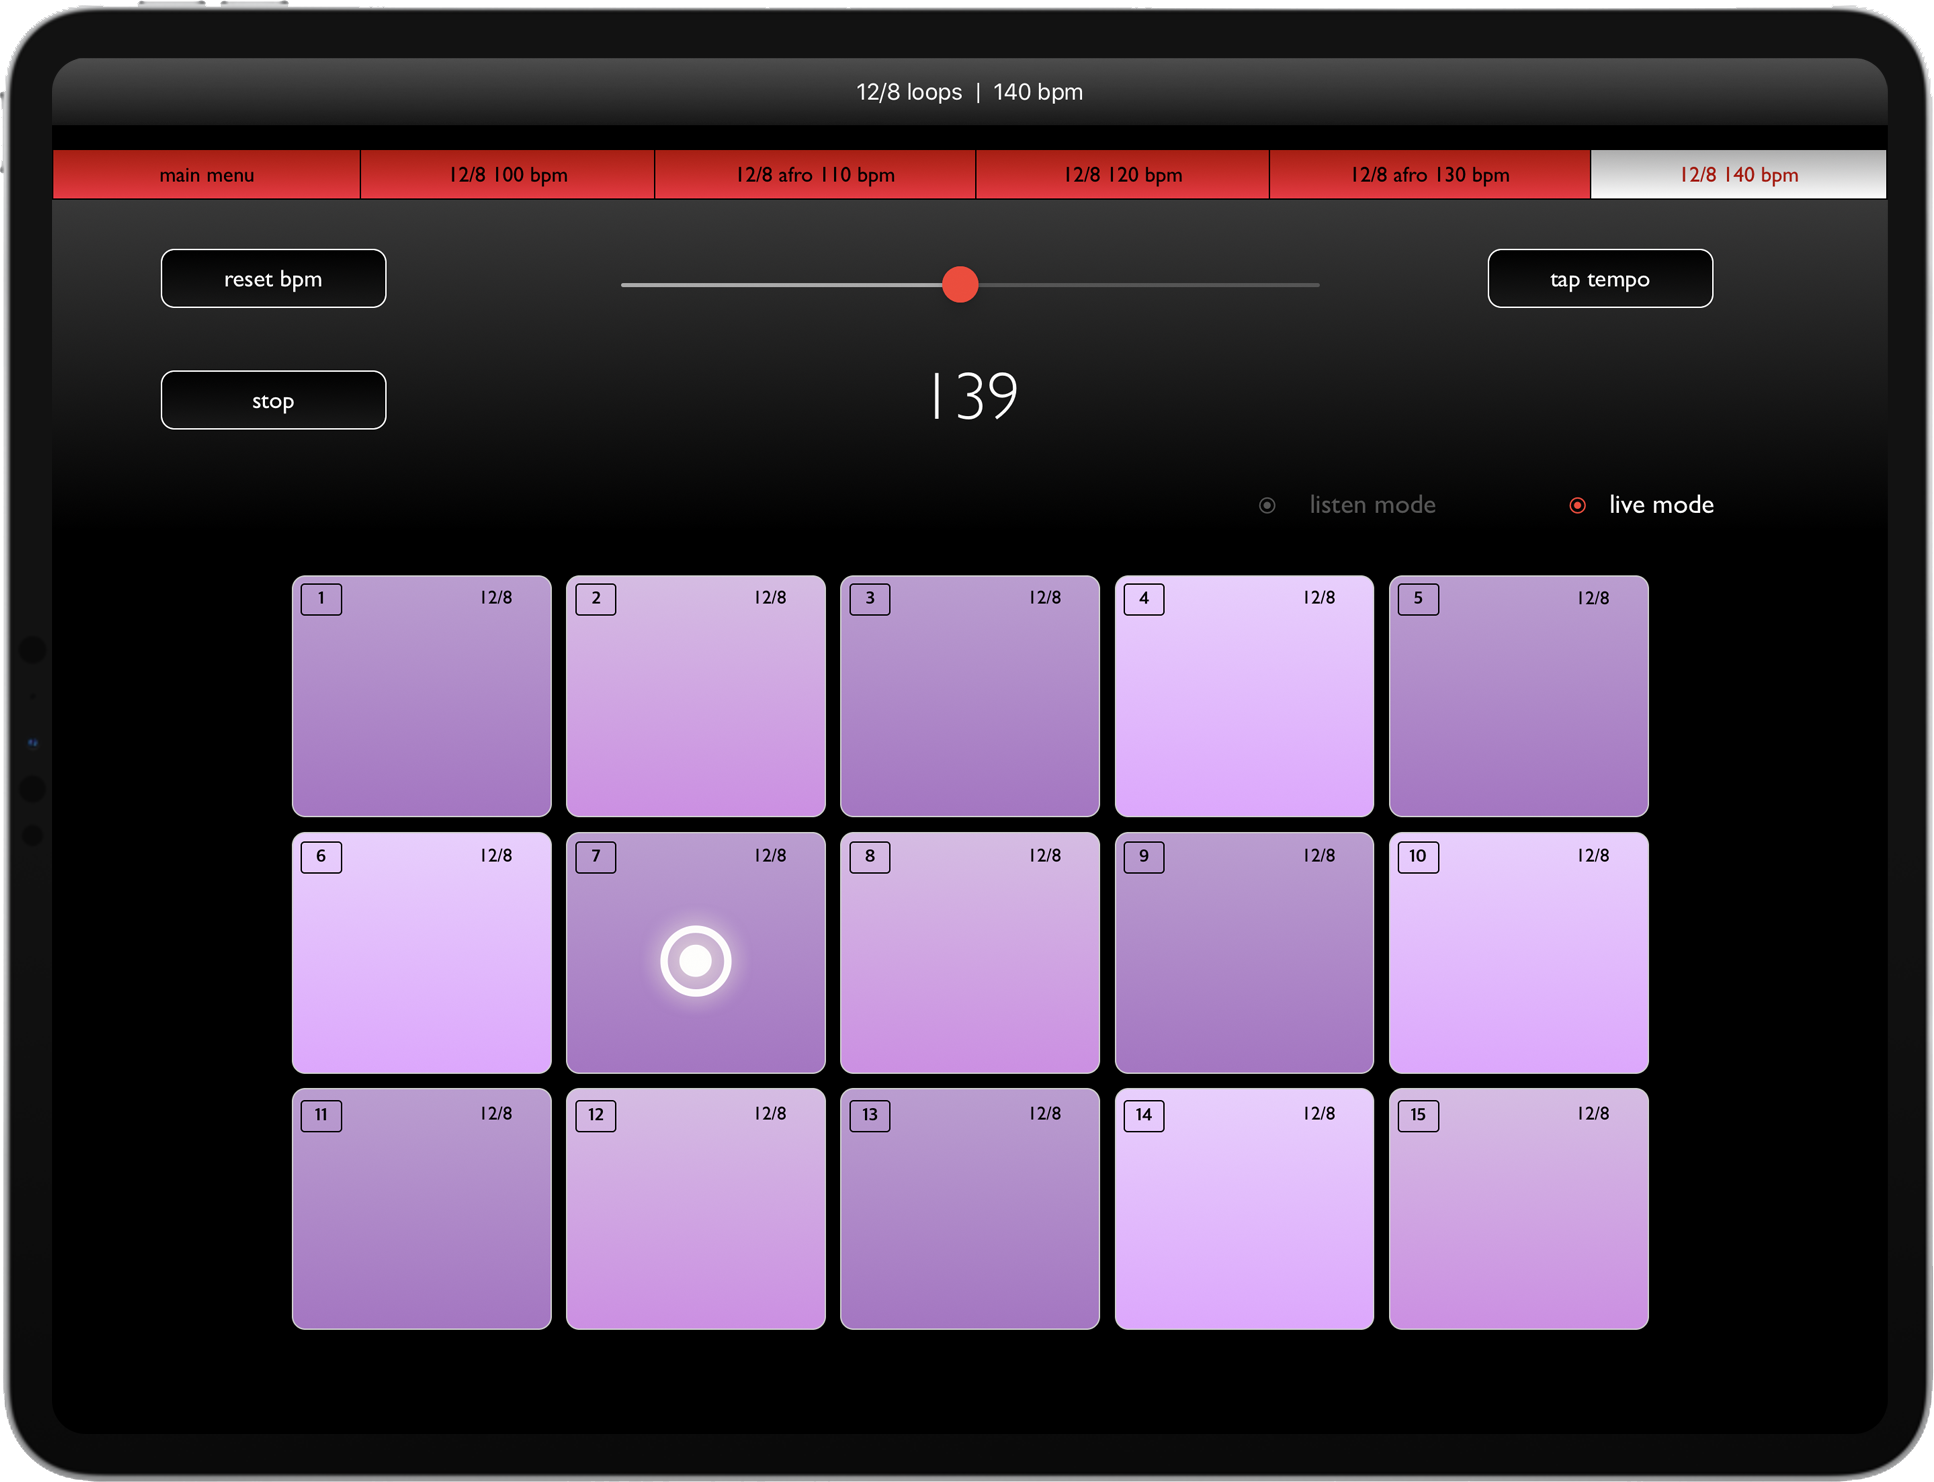 iPad 12/8 loops live mode'